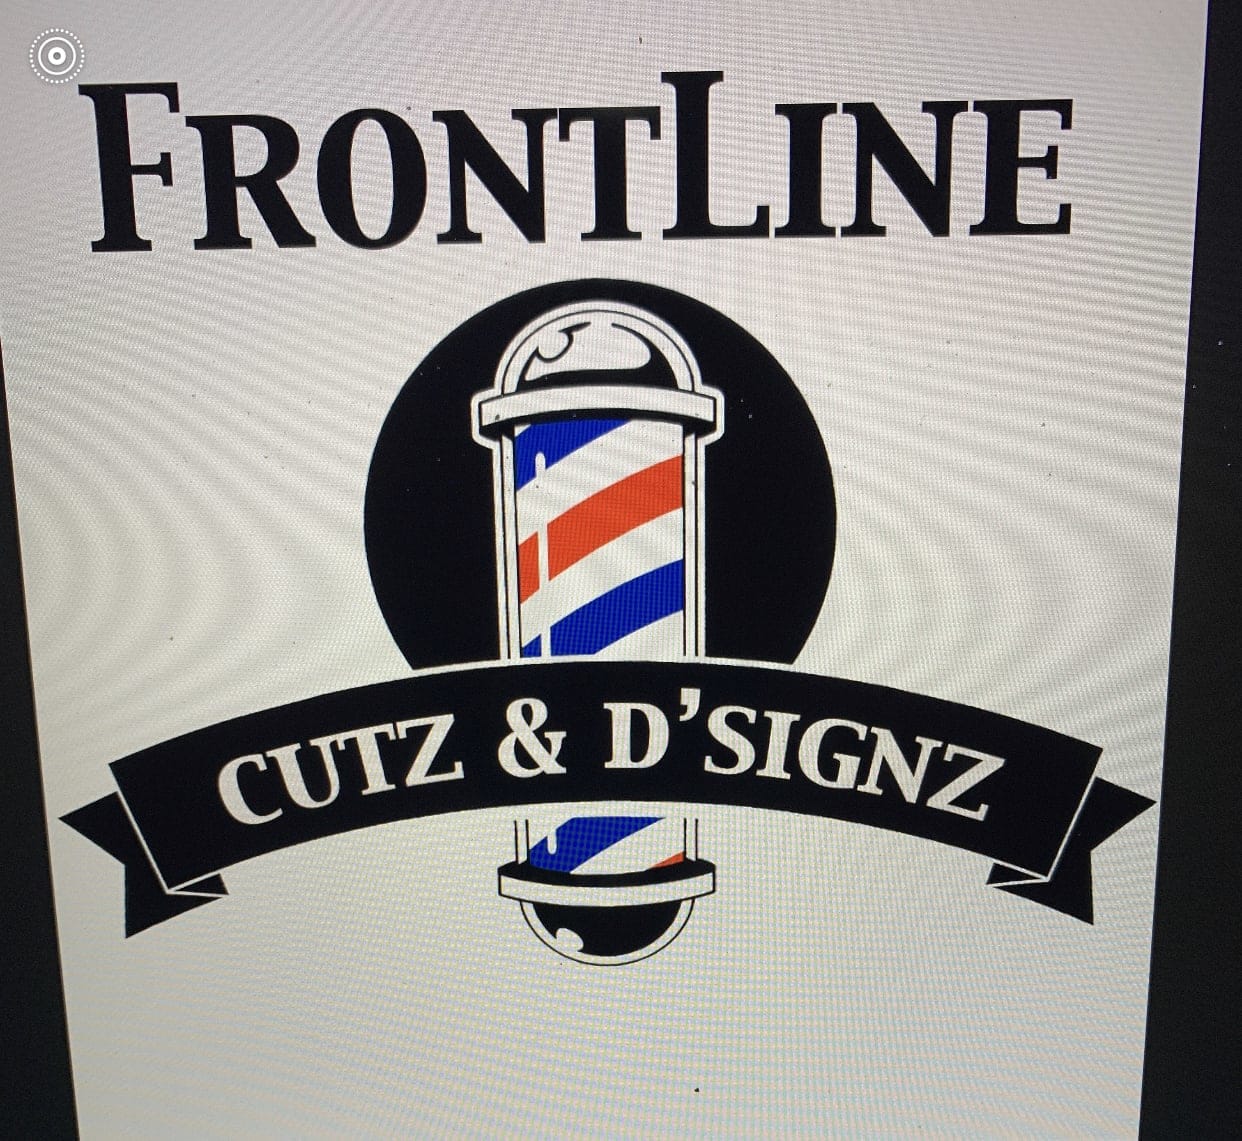 FrontLine Cutz & D’signz